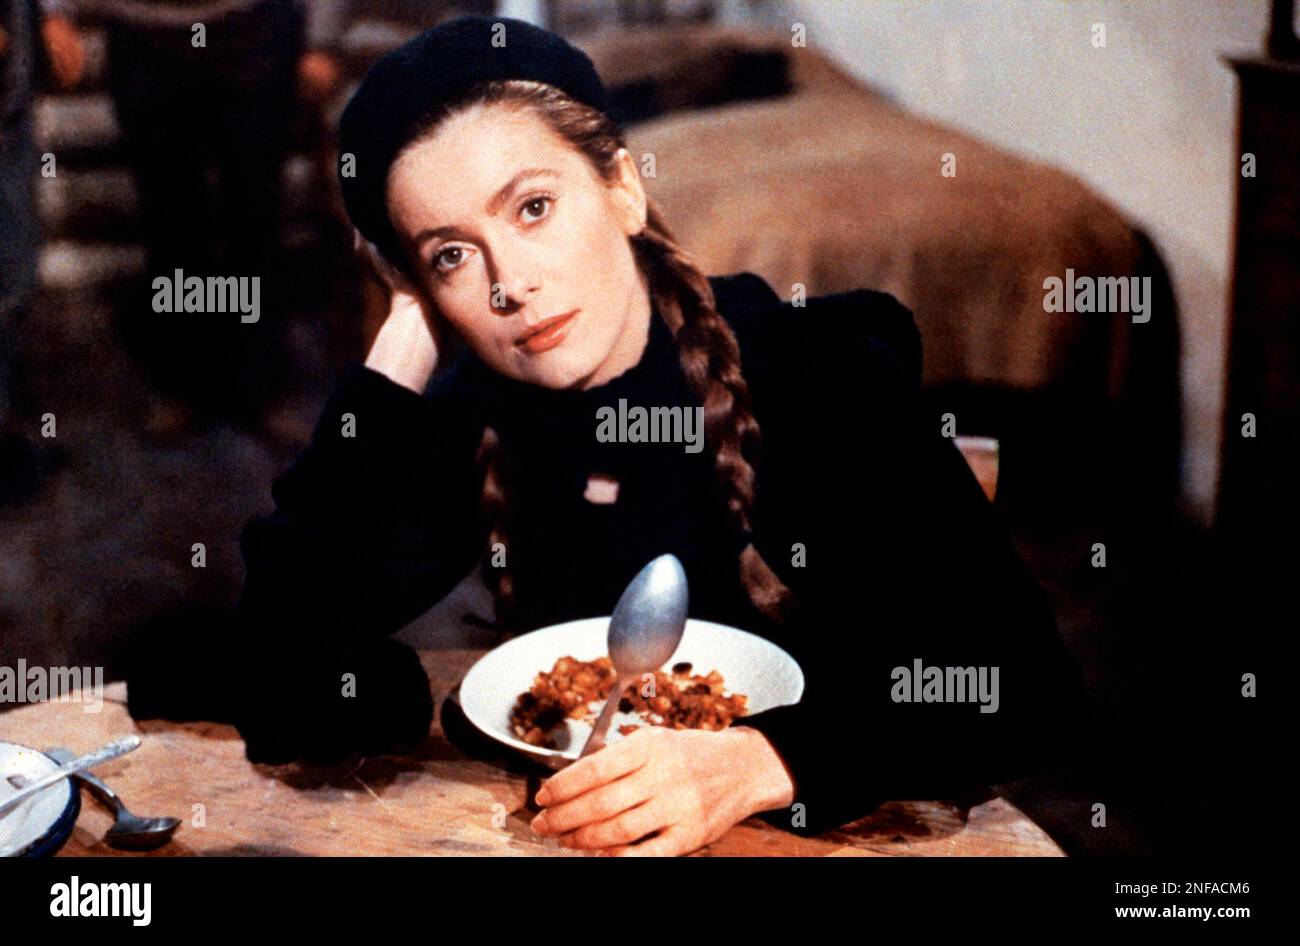 CATHERINE DENEUVE in TRISTANA (1970), directed by LUIS BUÑUEL. Credit: EPOCA FILMS / Album Stock Photo